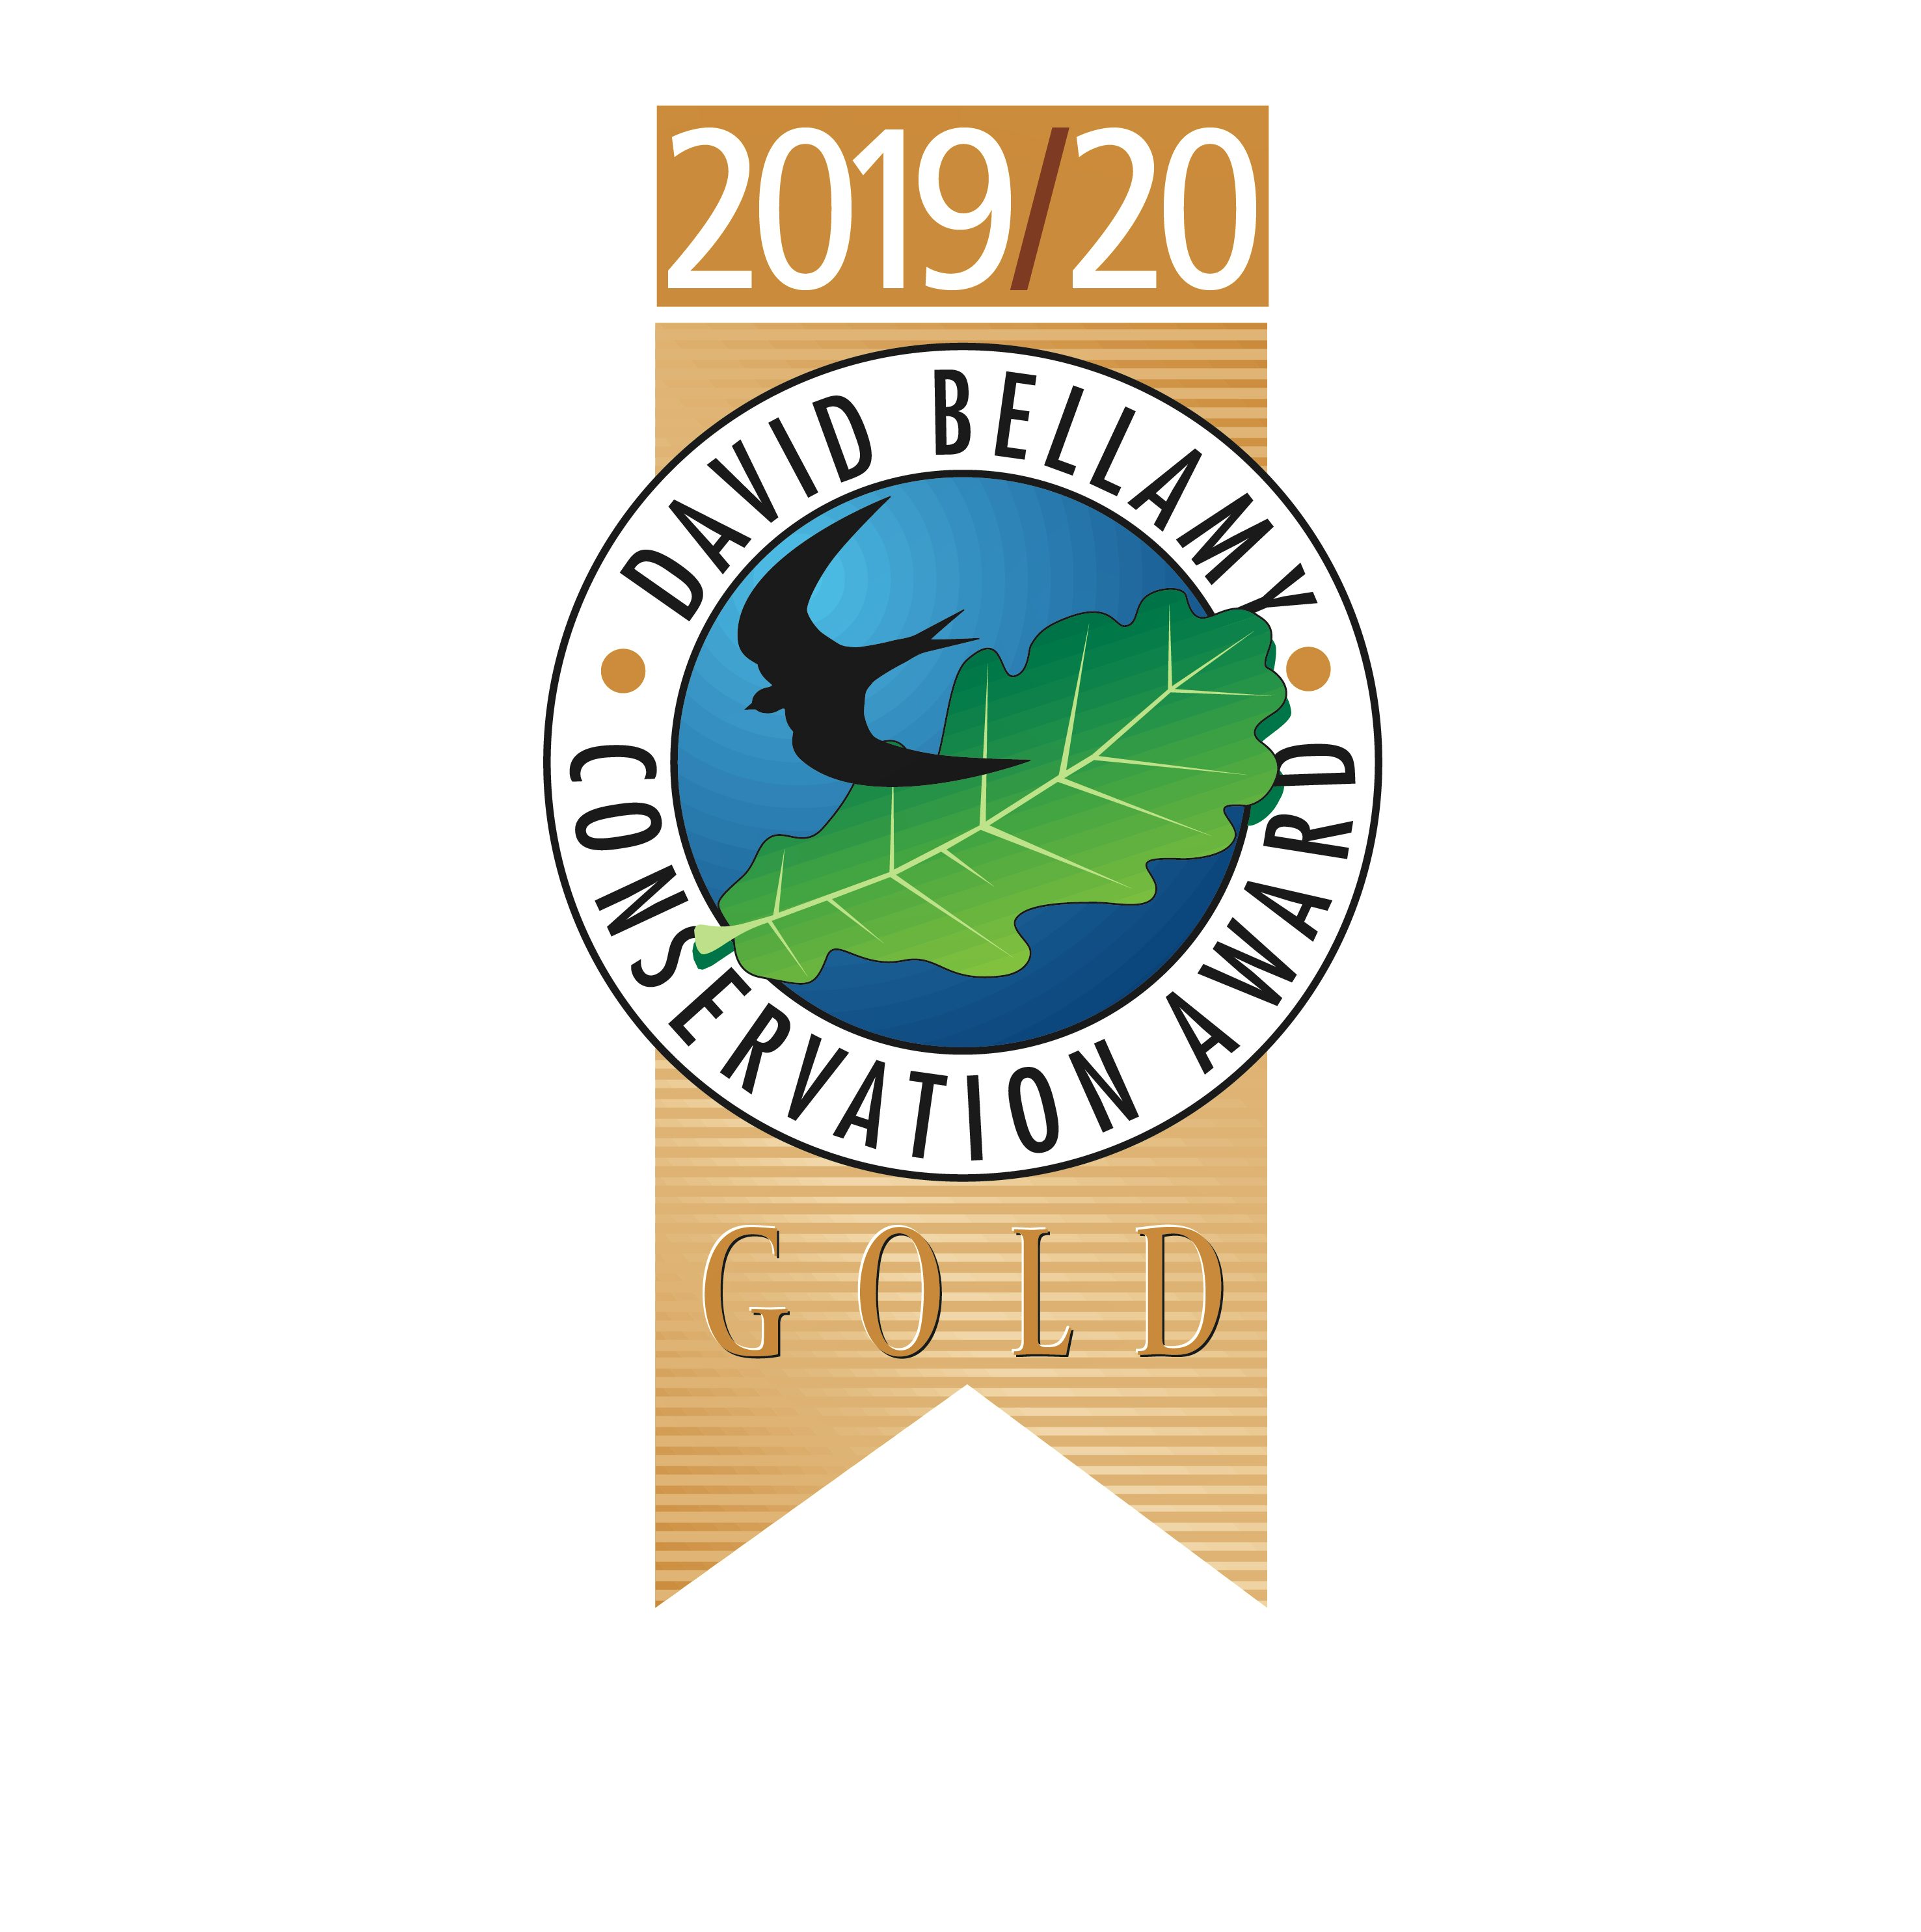 Gold David Bellamy Conservation Awards